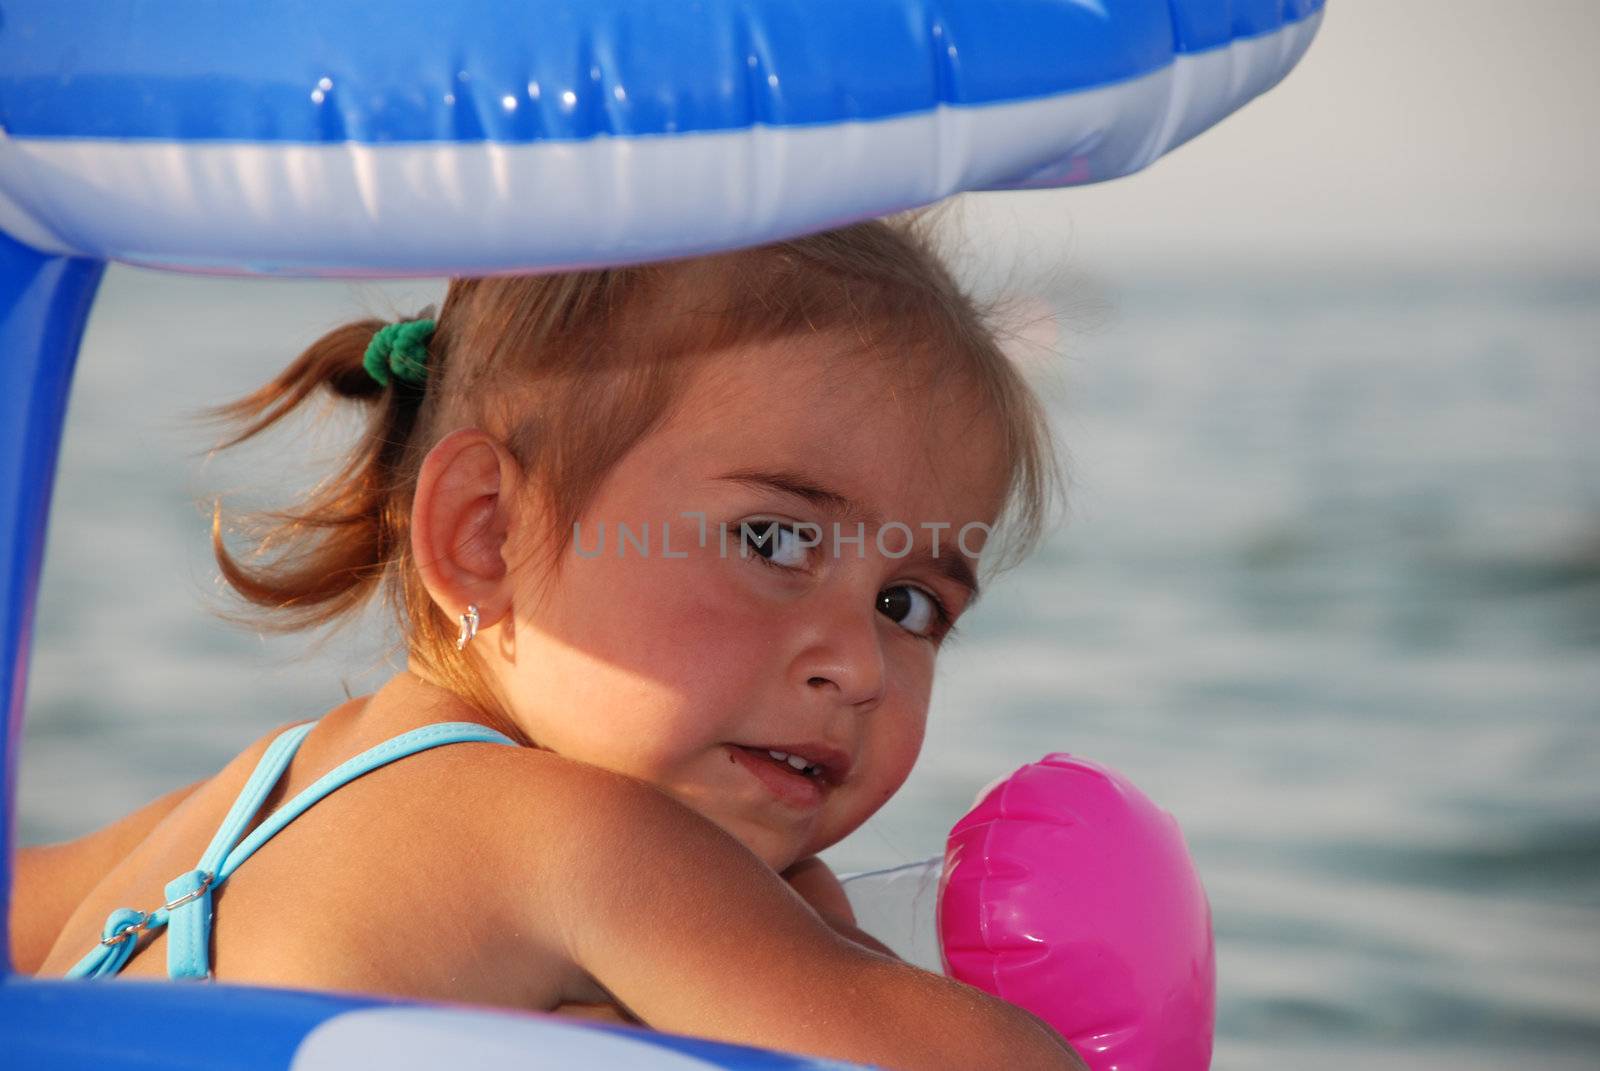 The babygirl in swimwear  by lapichka